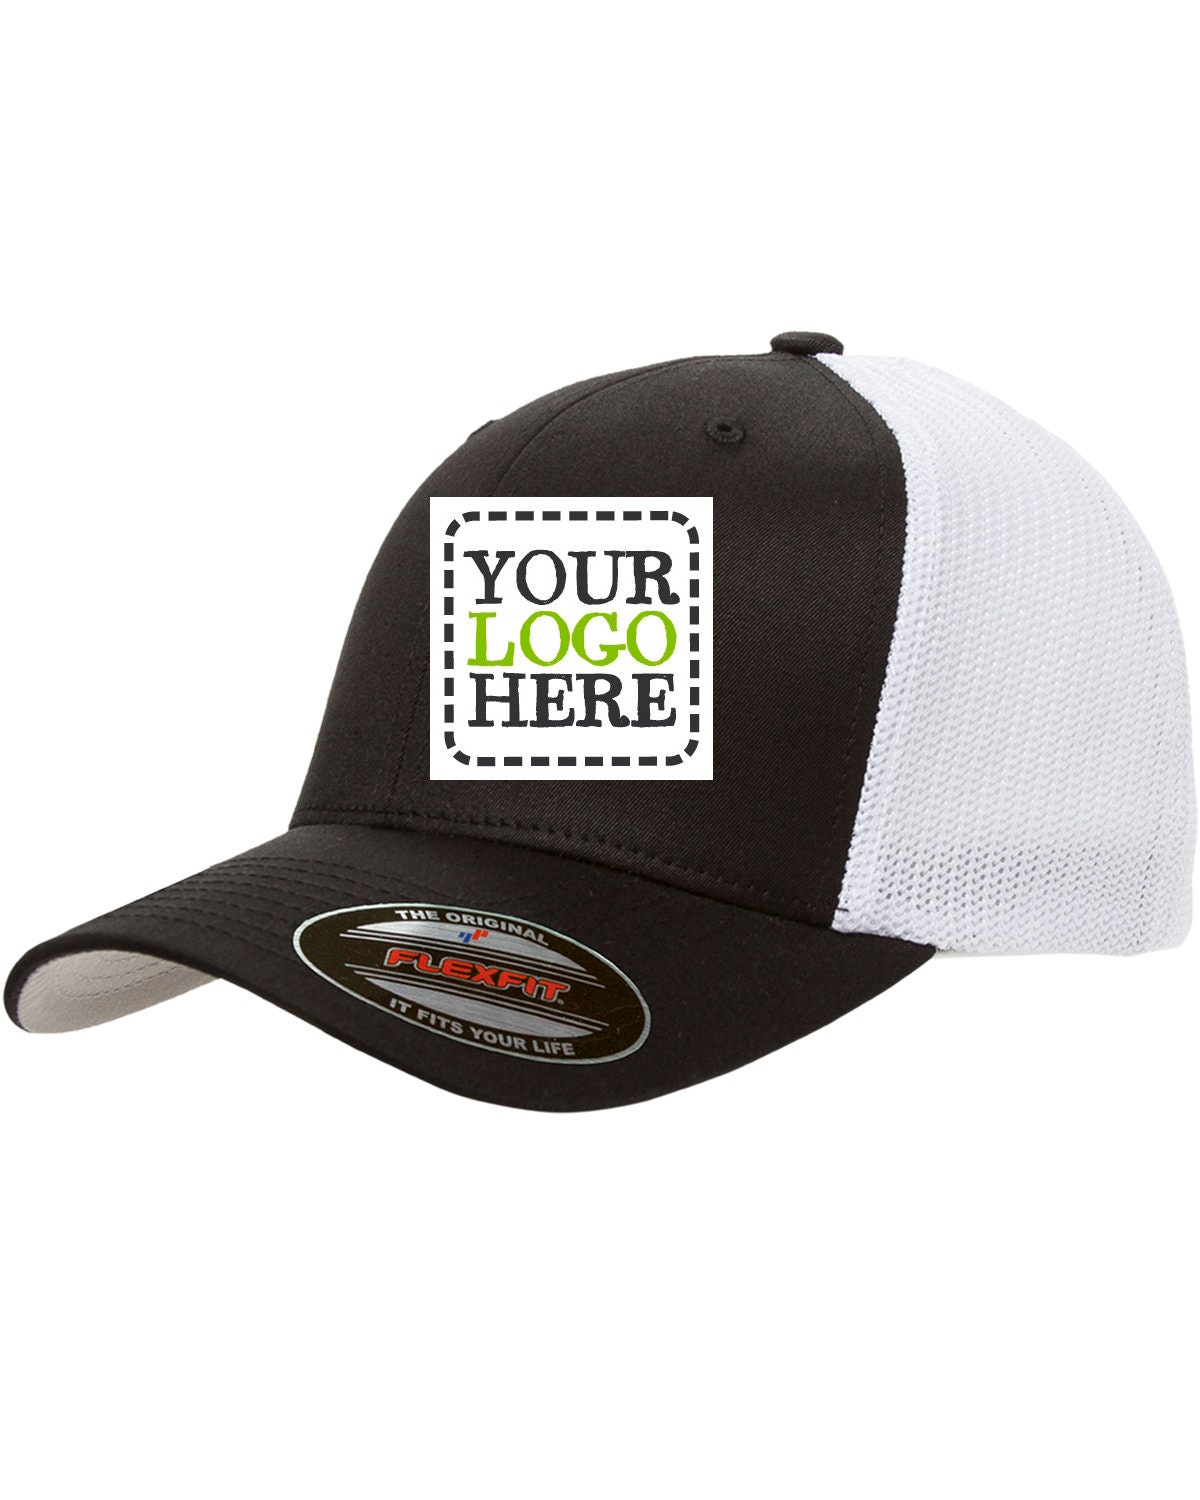 Wholeslae Flexfit Business Mens Logo Customized Hat Hat Hat / / / Hat / Etsy Custom Hat / Hat Custom Personalized Business Embroidered - Trucker 